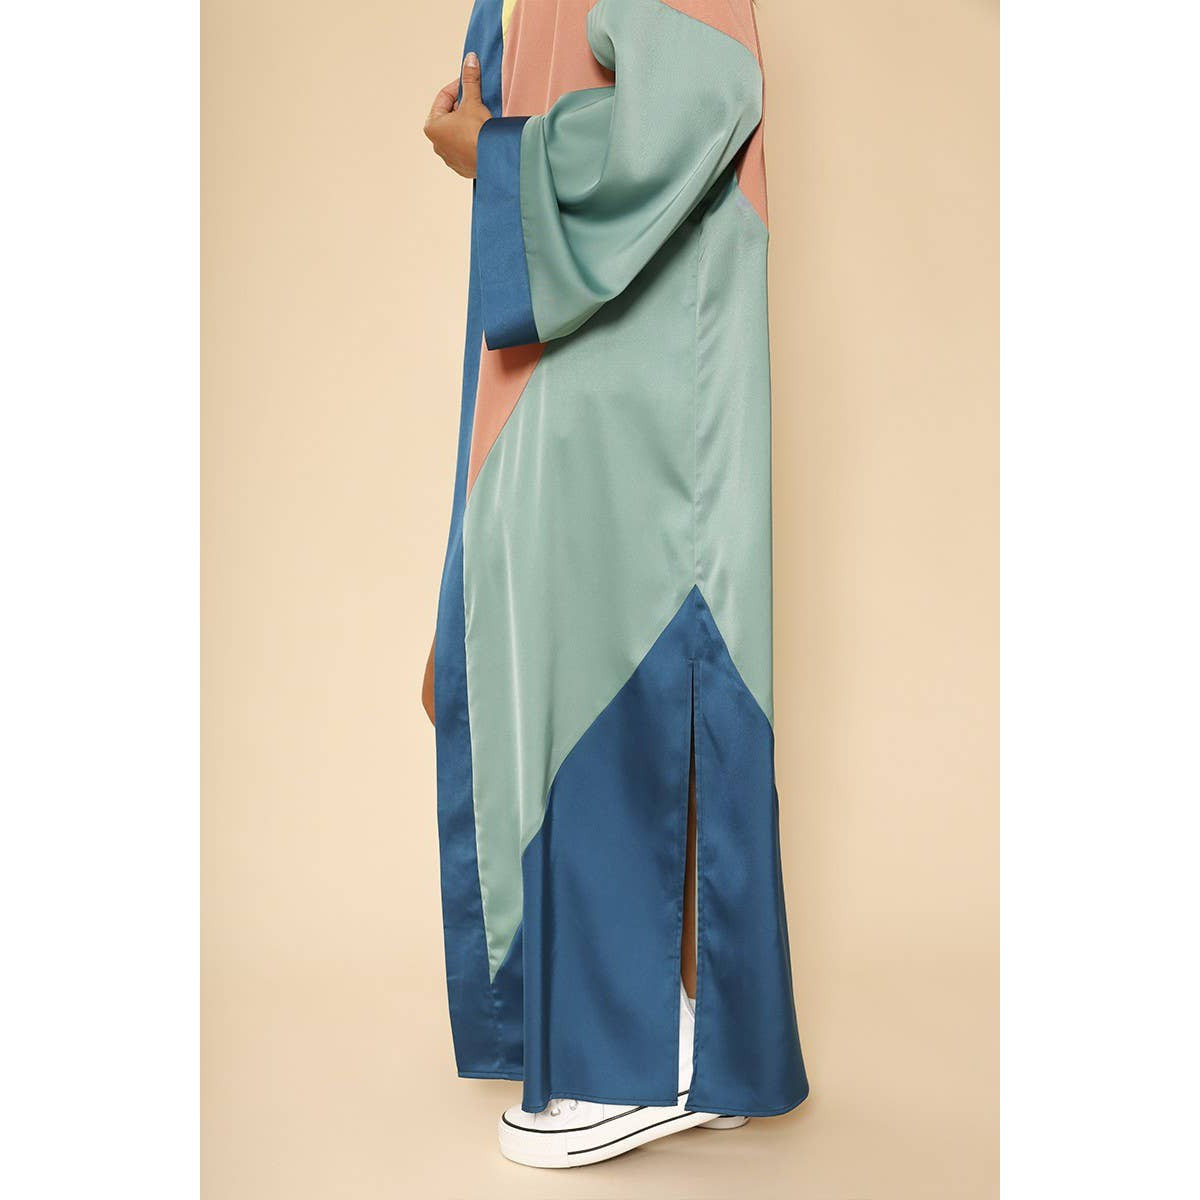 Miss Sparkling Chevron Kimono Big Long Textured Satin Duster | Light Jacket, Outdoor Robe, Swimsuit Coverup | Sizes SM-XL